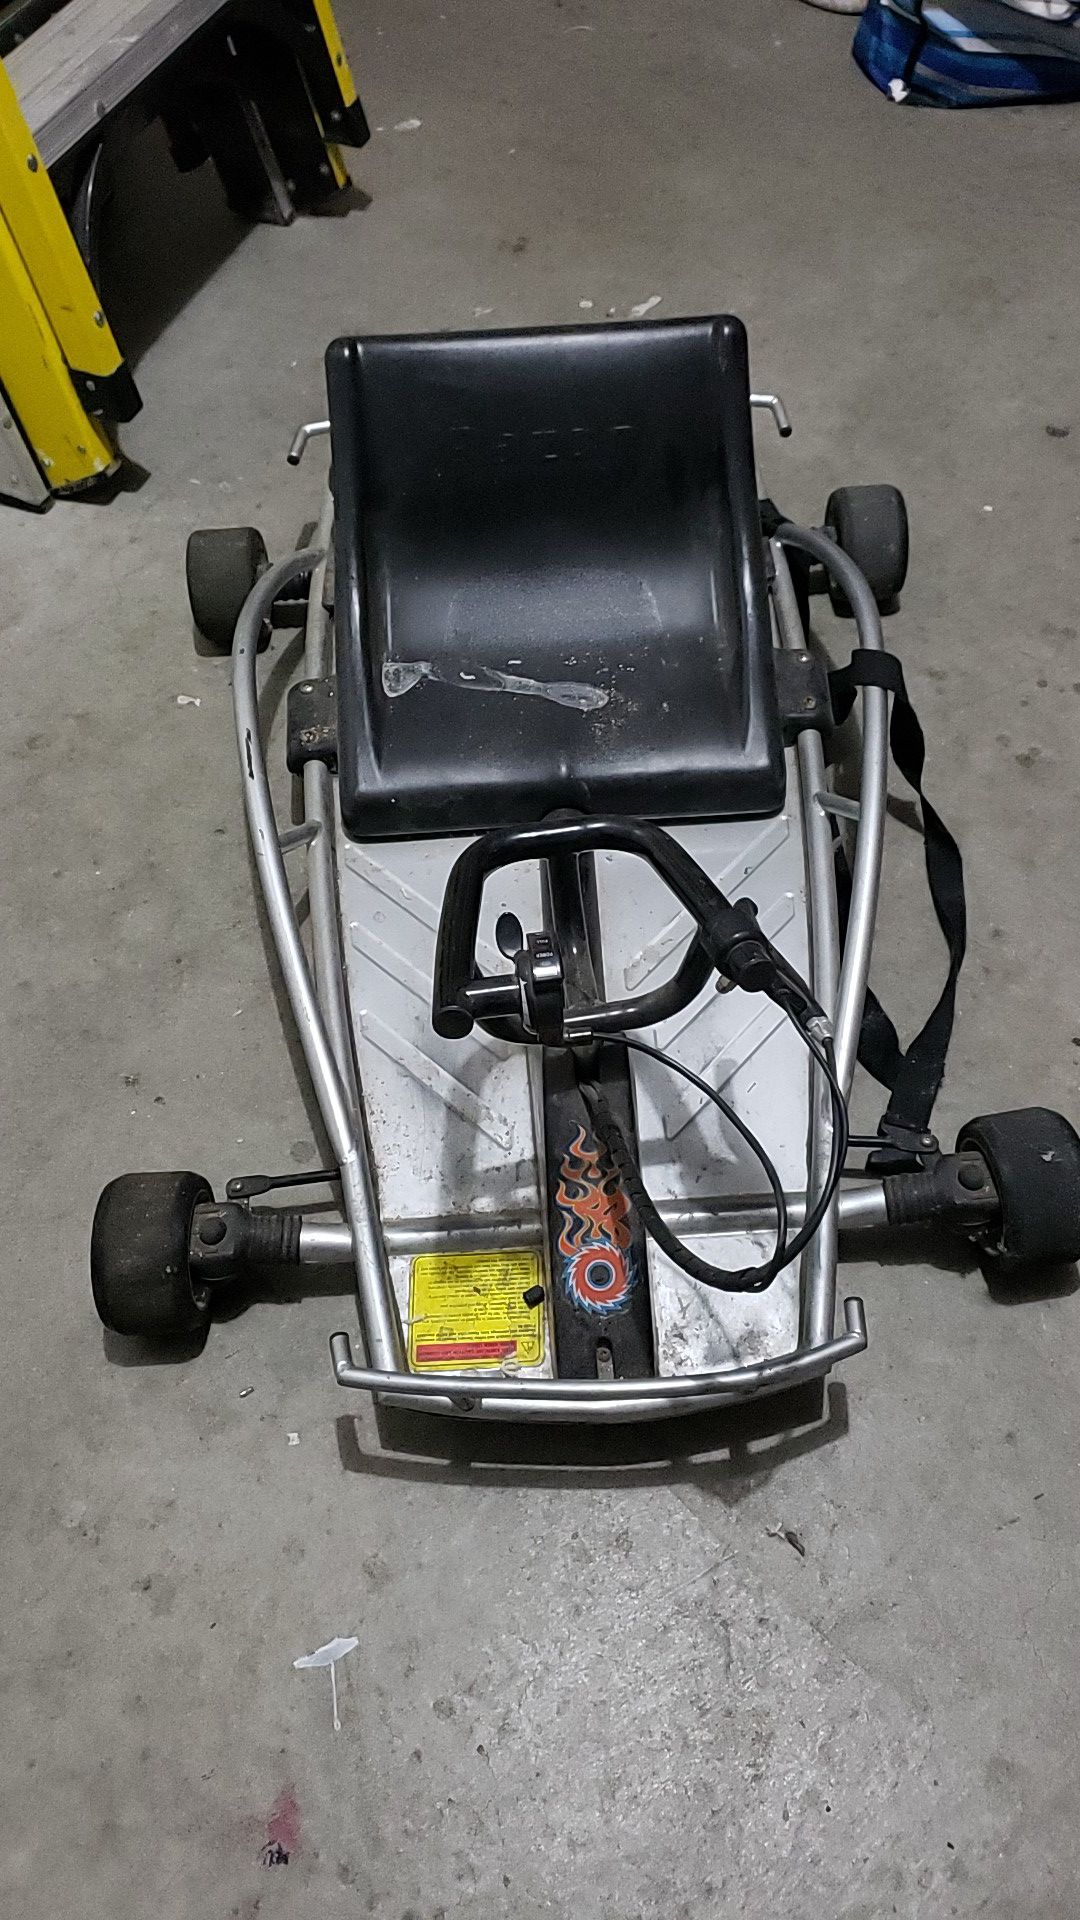 Razor Electric Go-cart